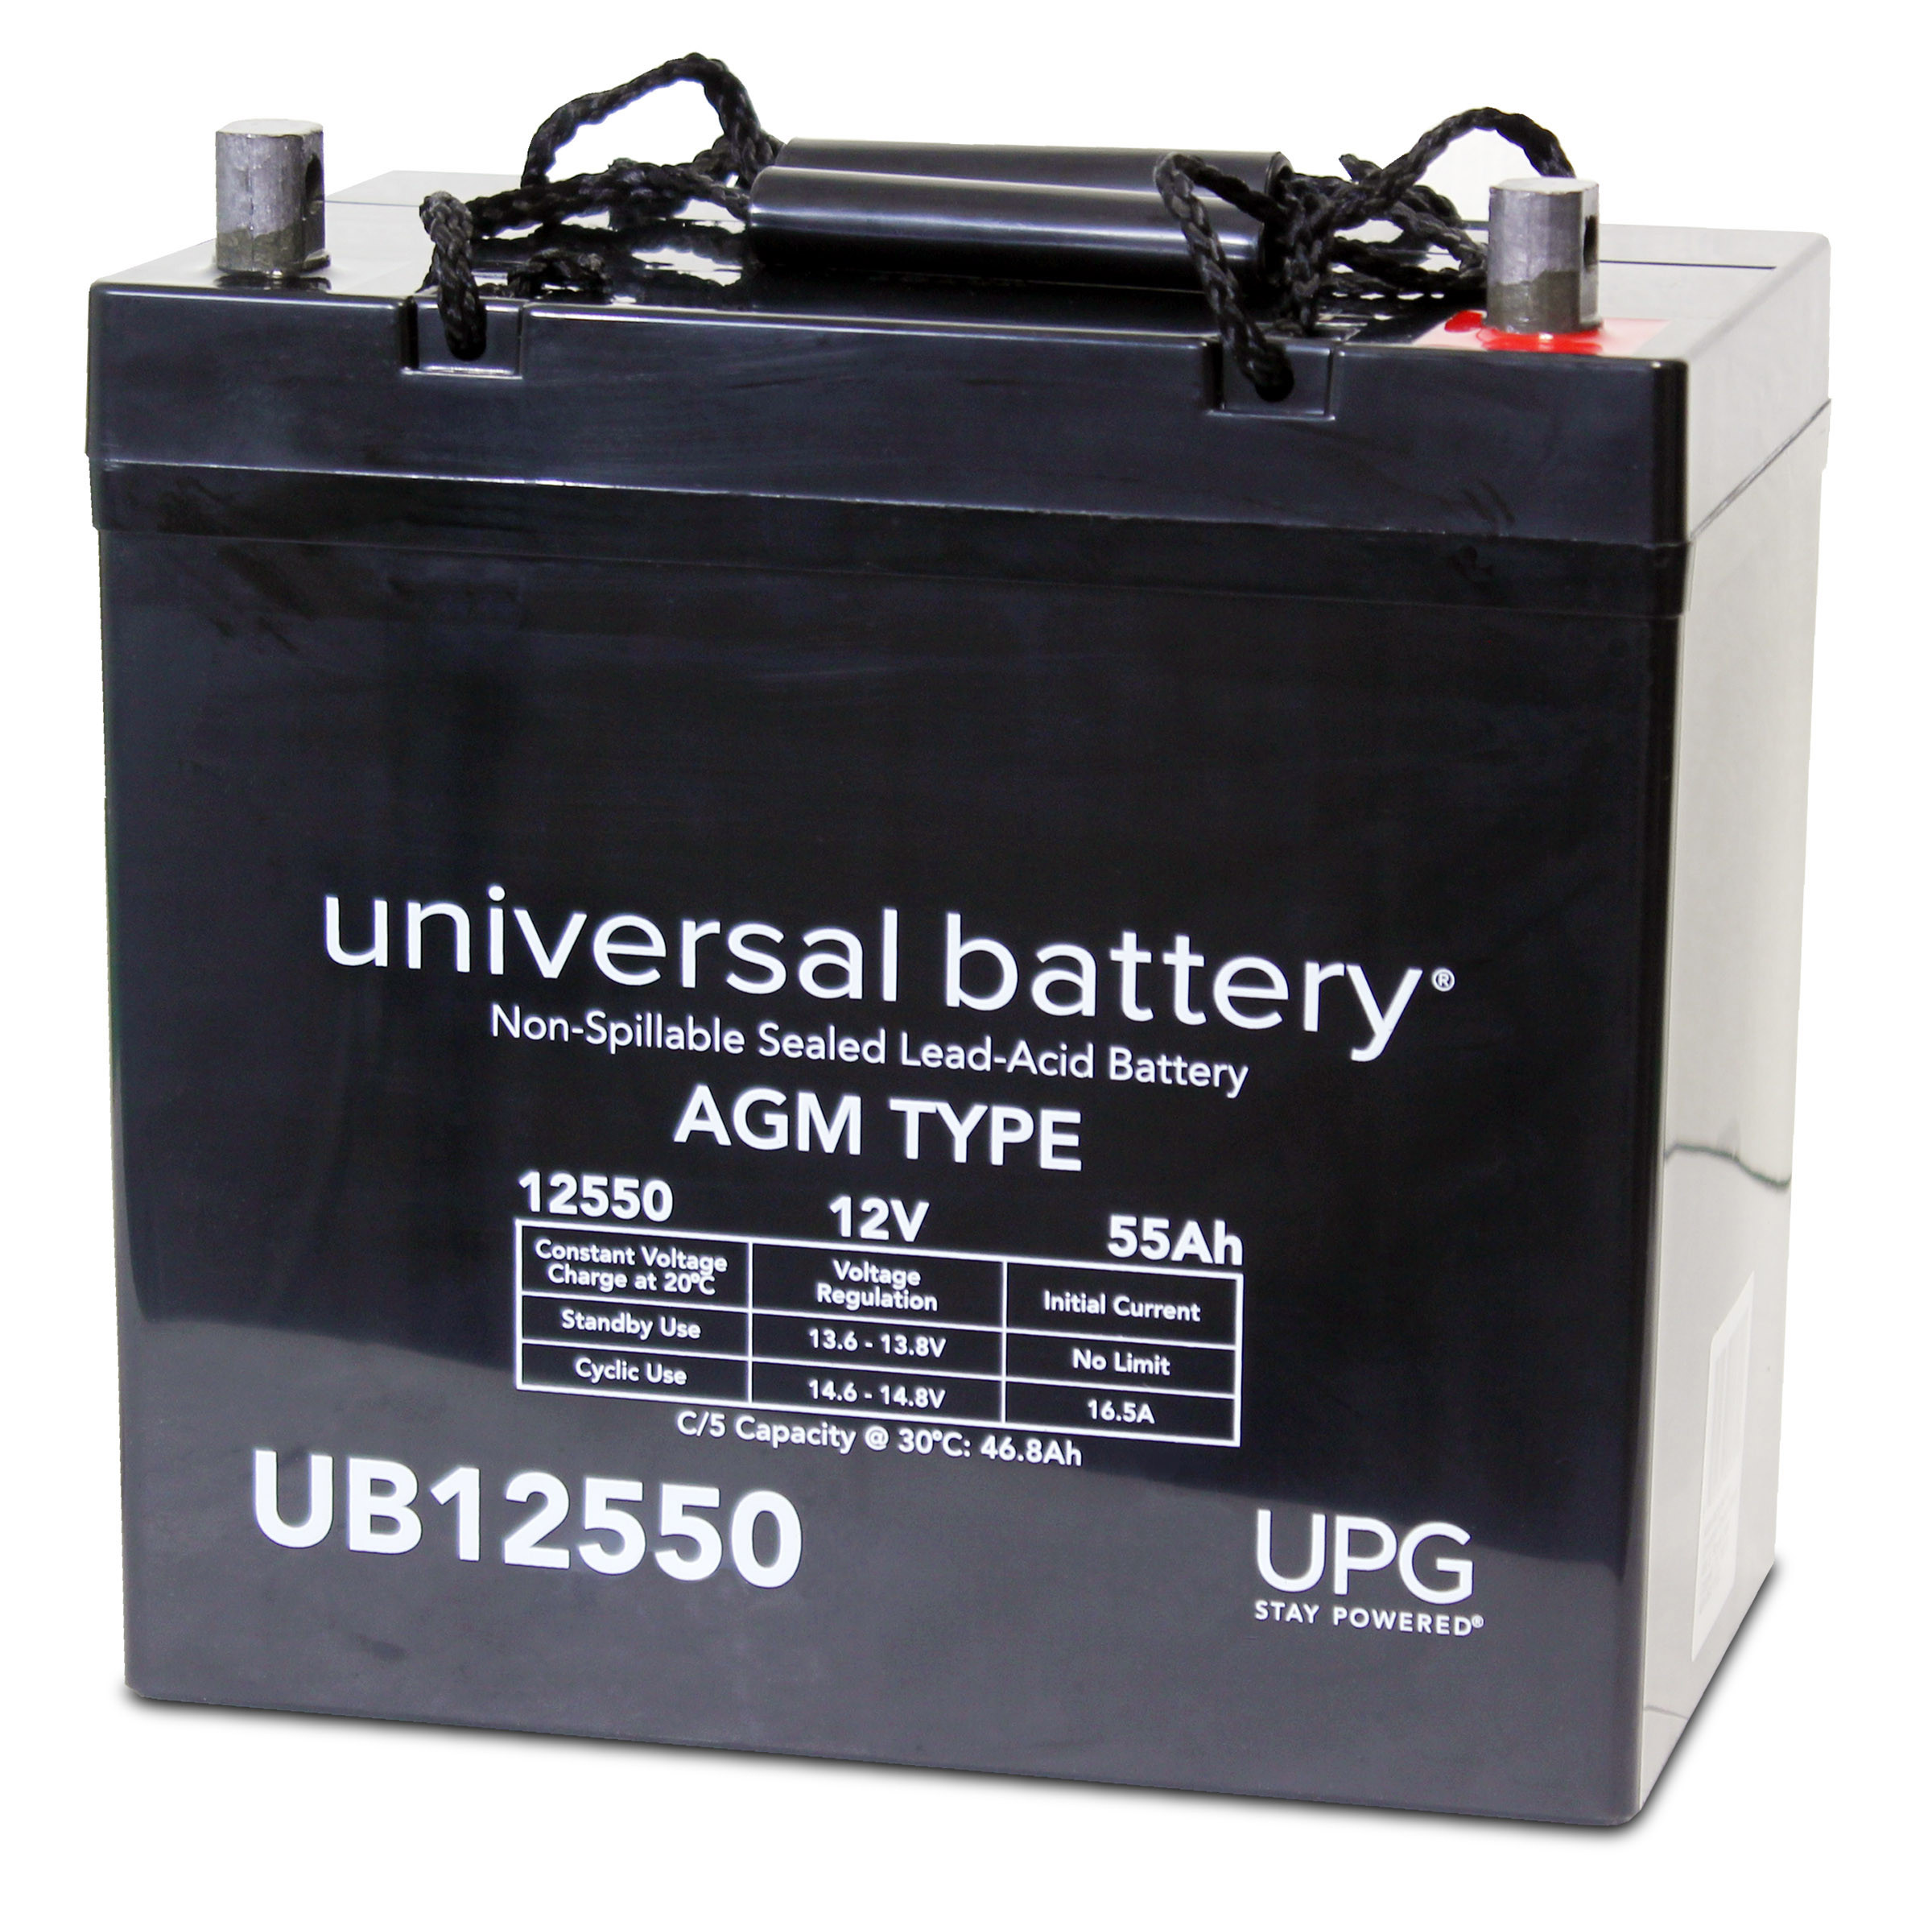 Sealed lead battery. Whisper Power 12v 55ah. AGM 22. Аккумулятор на NF Dakota. Kiper GPL-12550.